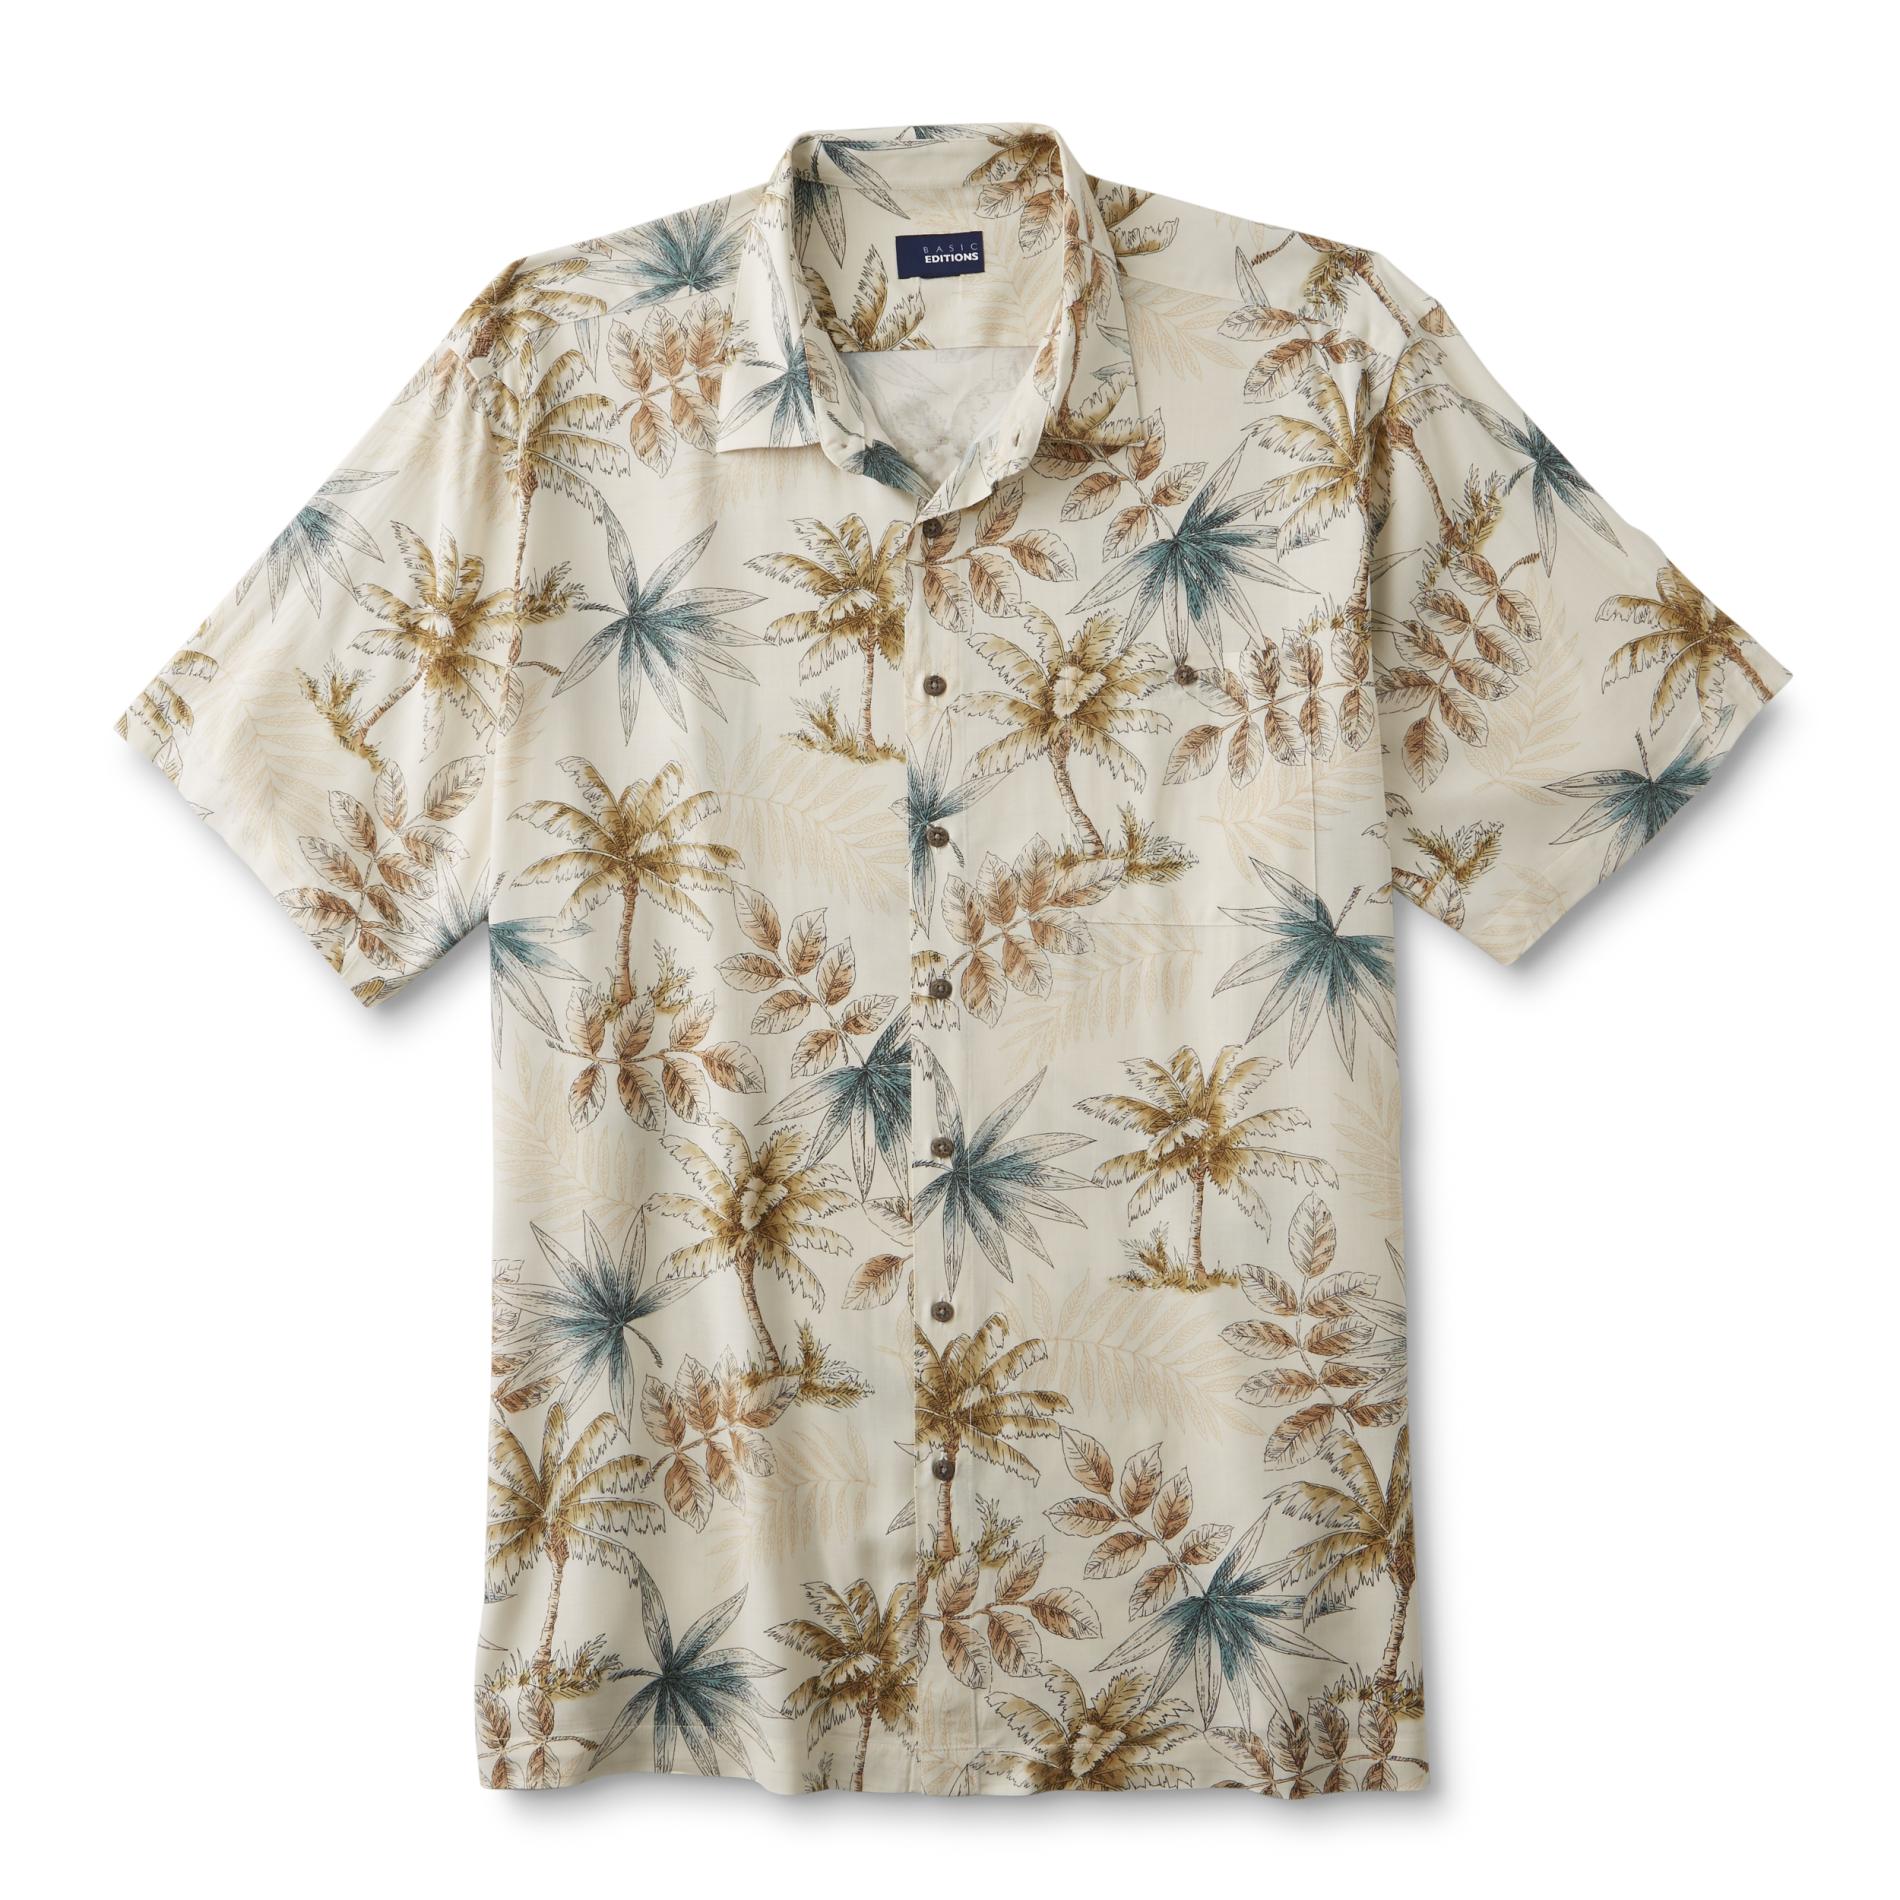 Basic Editions Men's Big & Tall Hawaiian Shirt - Palm Tree